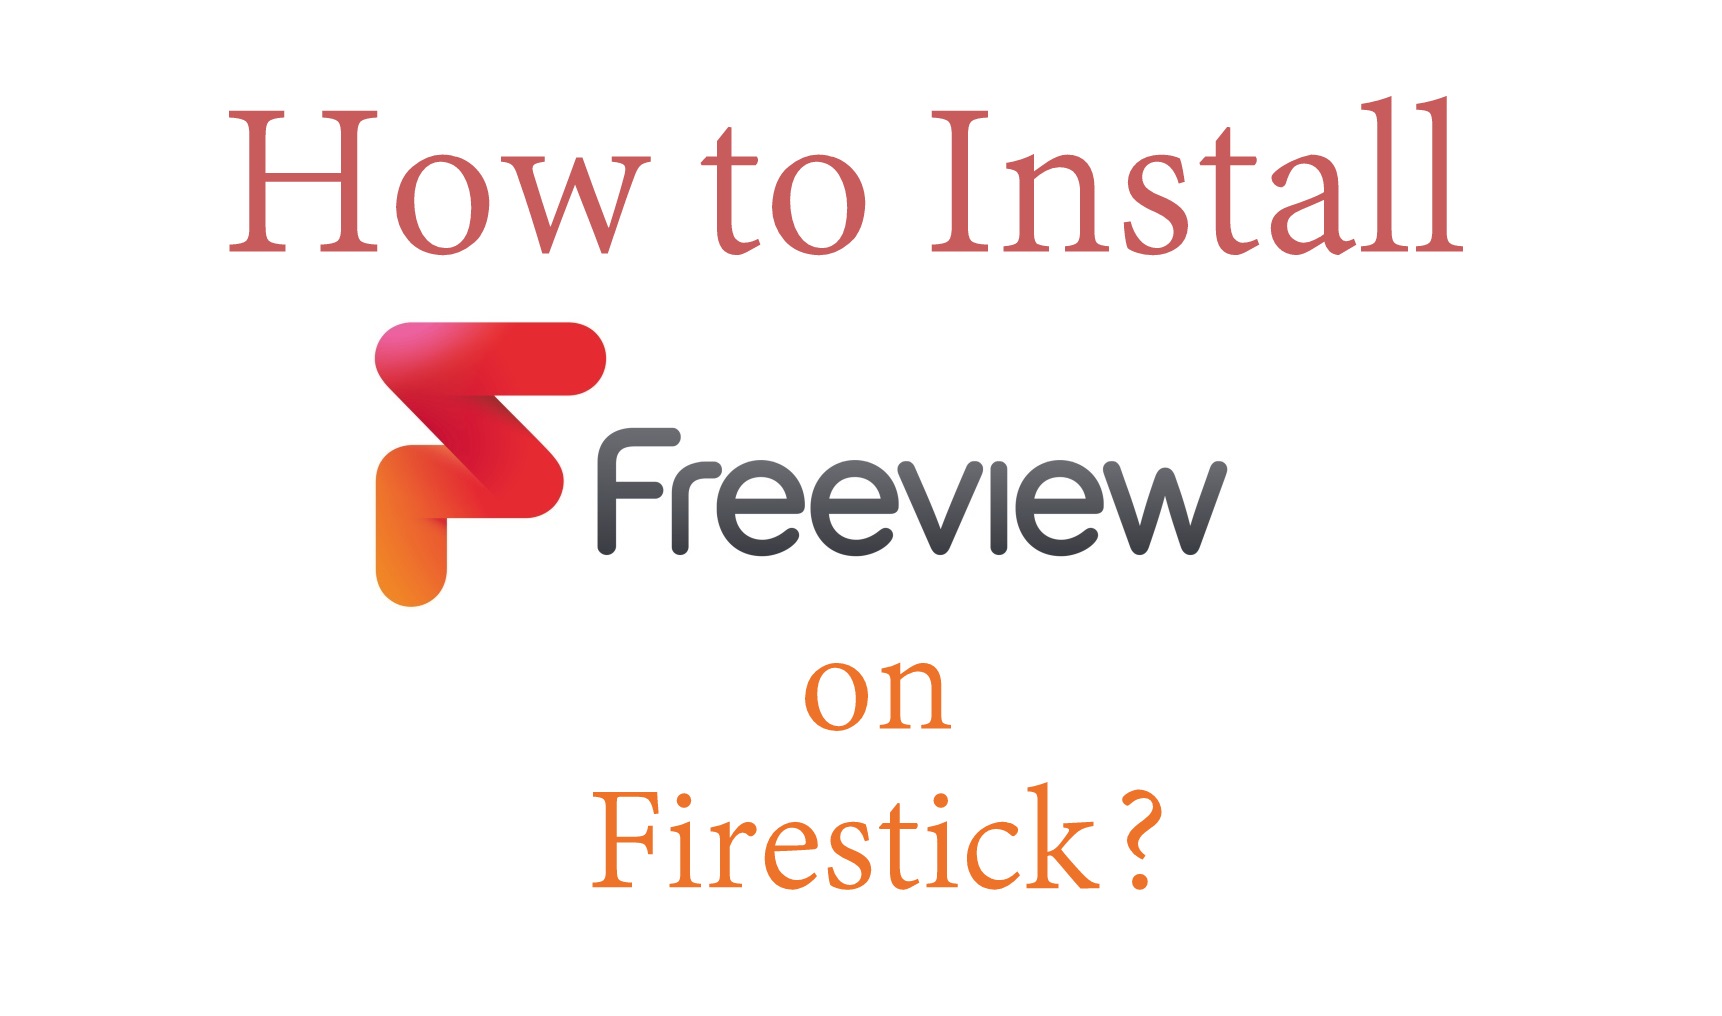 Cara menginstal Freeview di Firestick / Fire TV [2020] 1